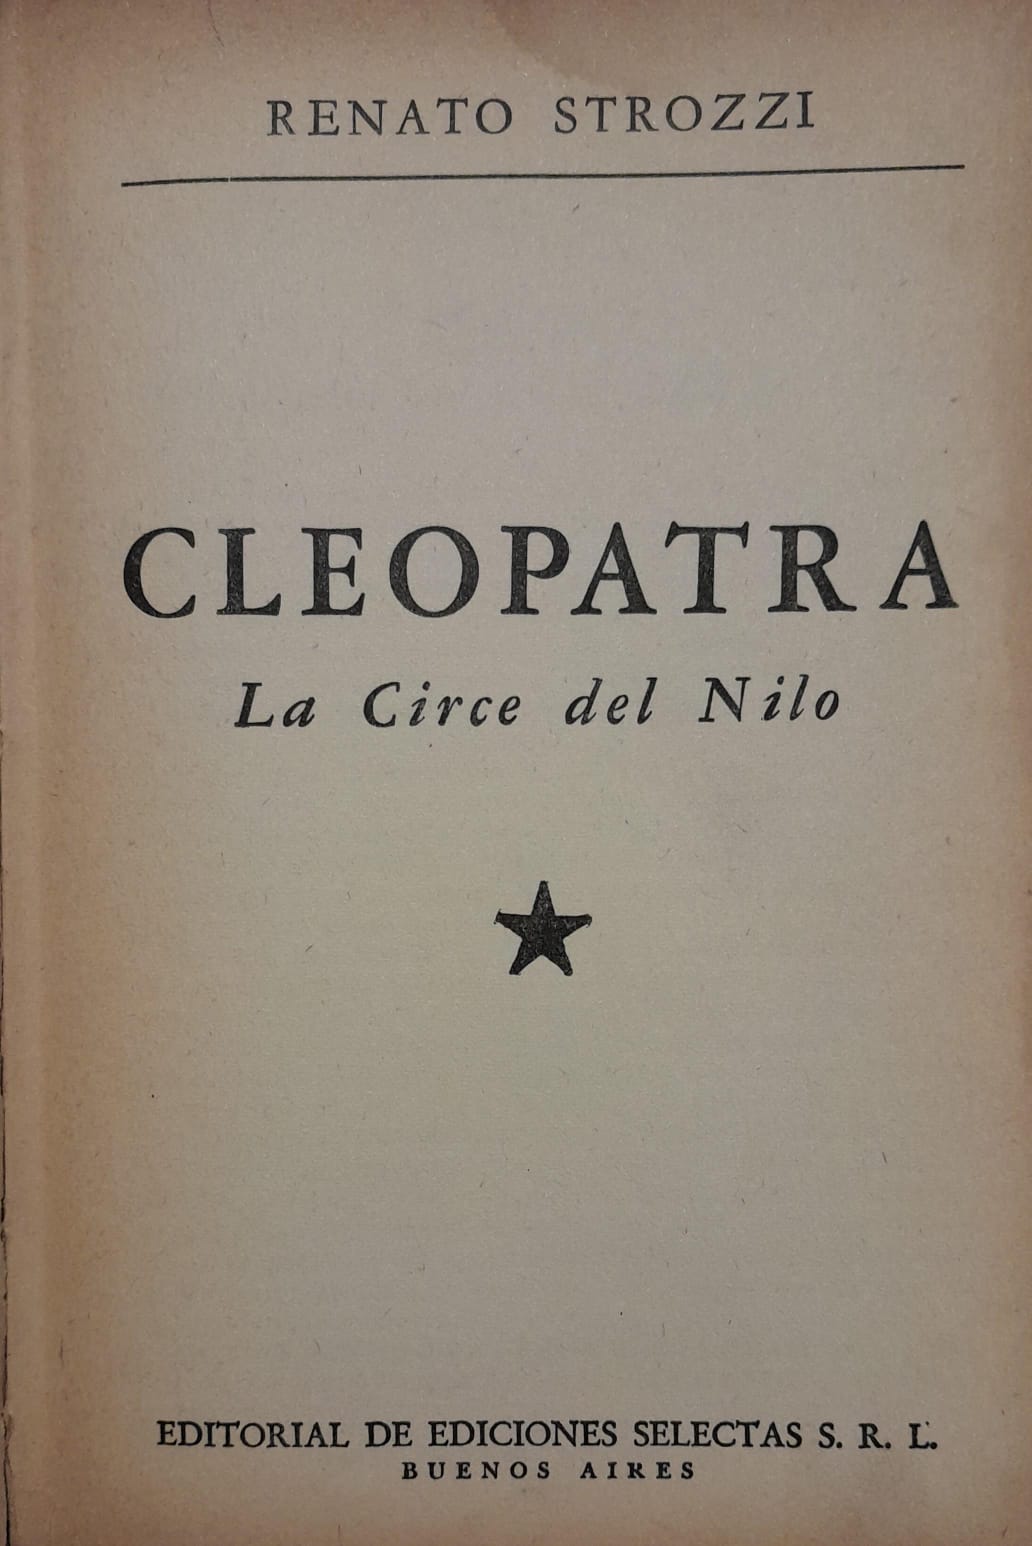 Cleopatra: La Circe del Nilo